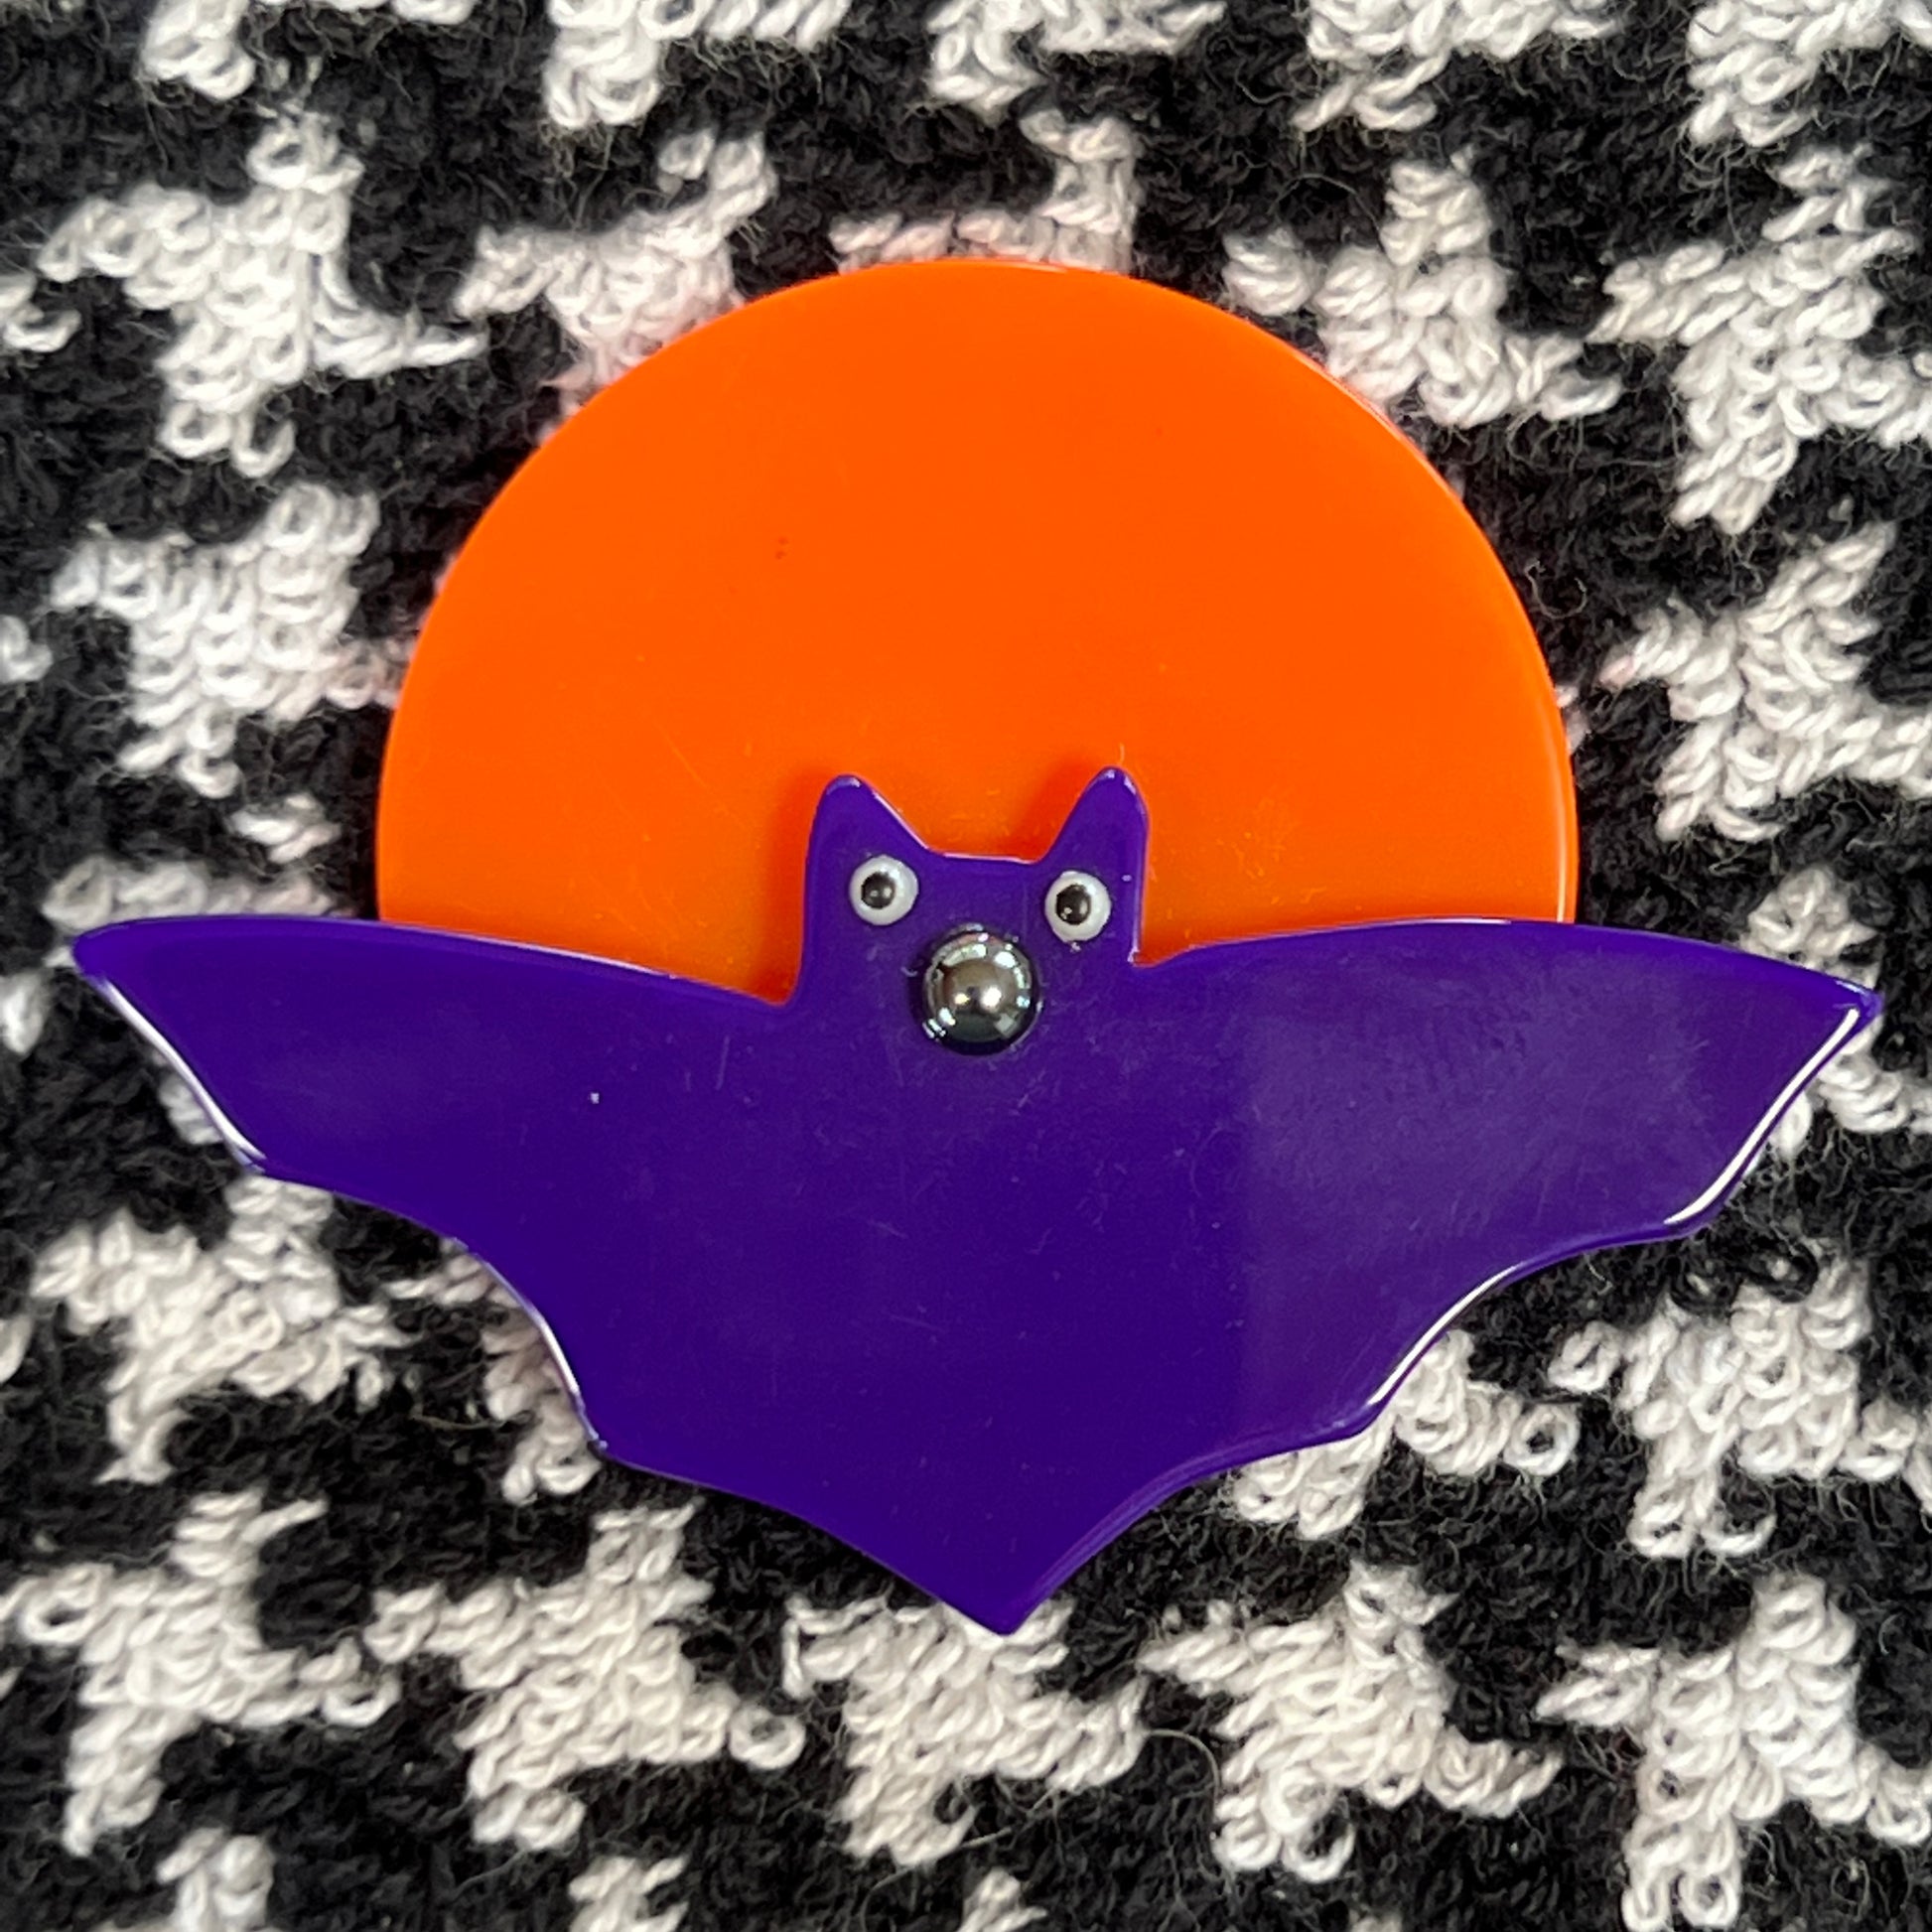 Small Mango and Purple Bat Moon Brooch in galalith